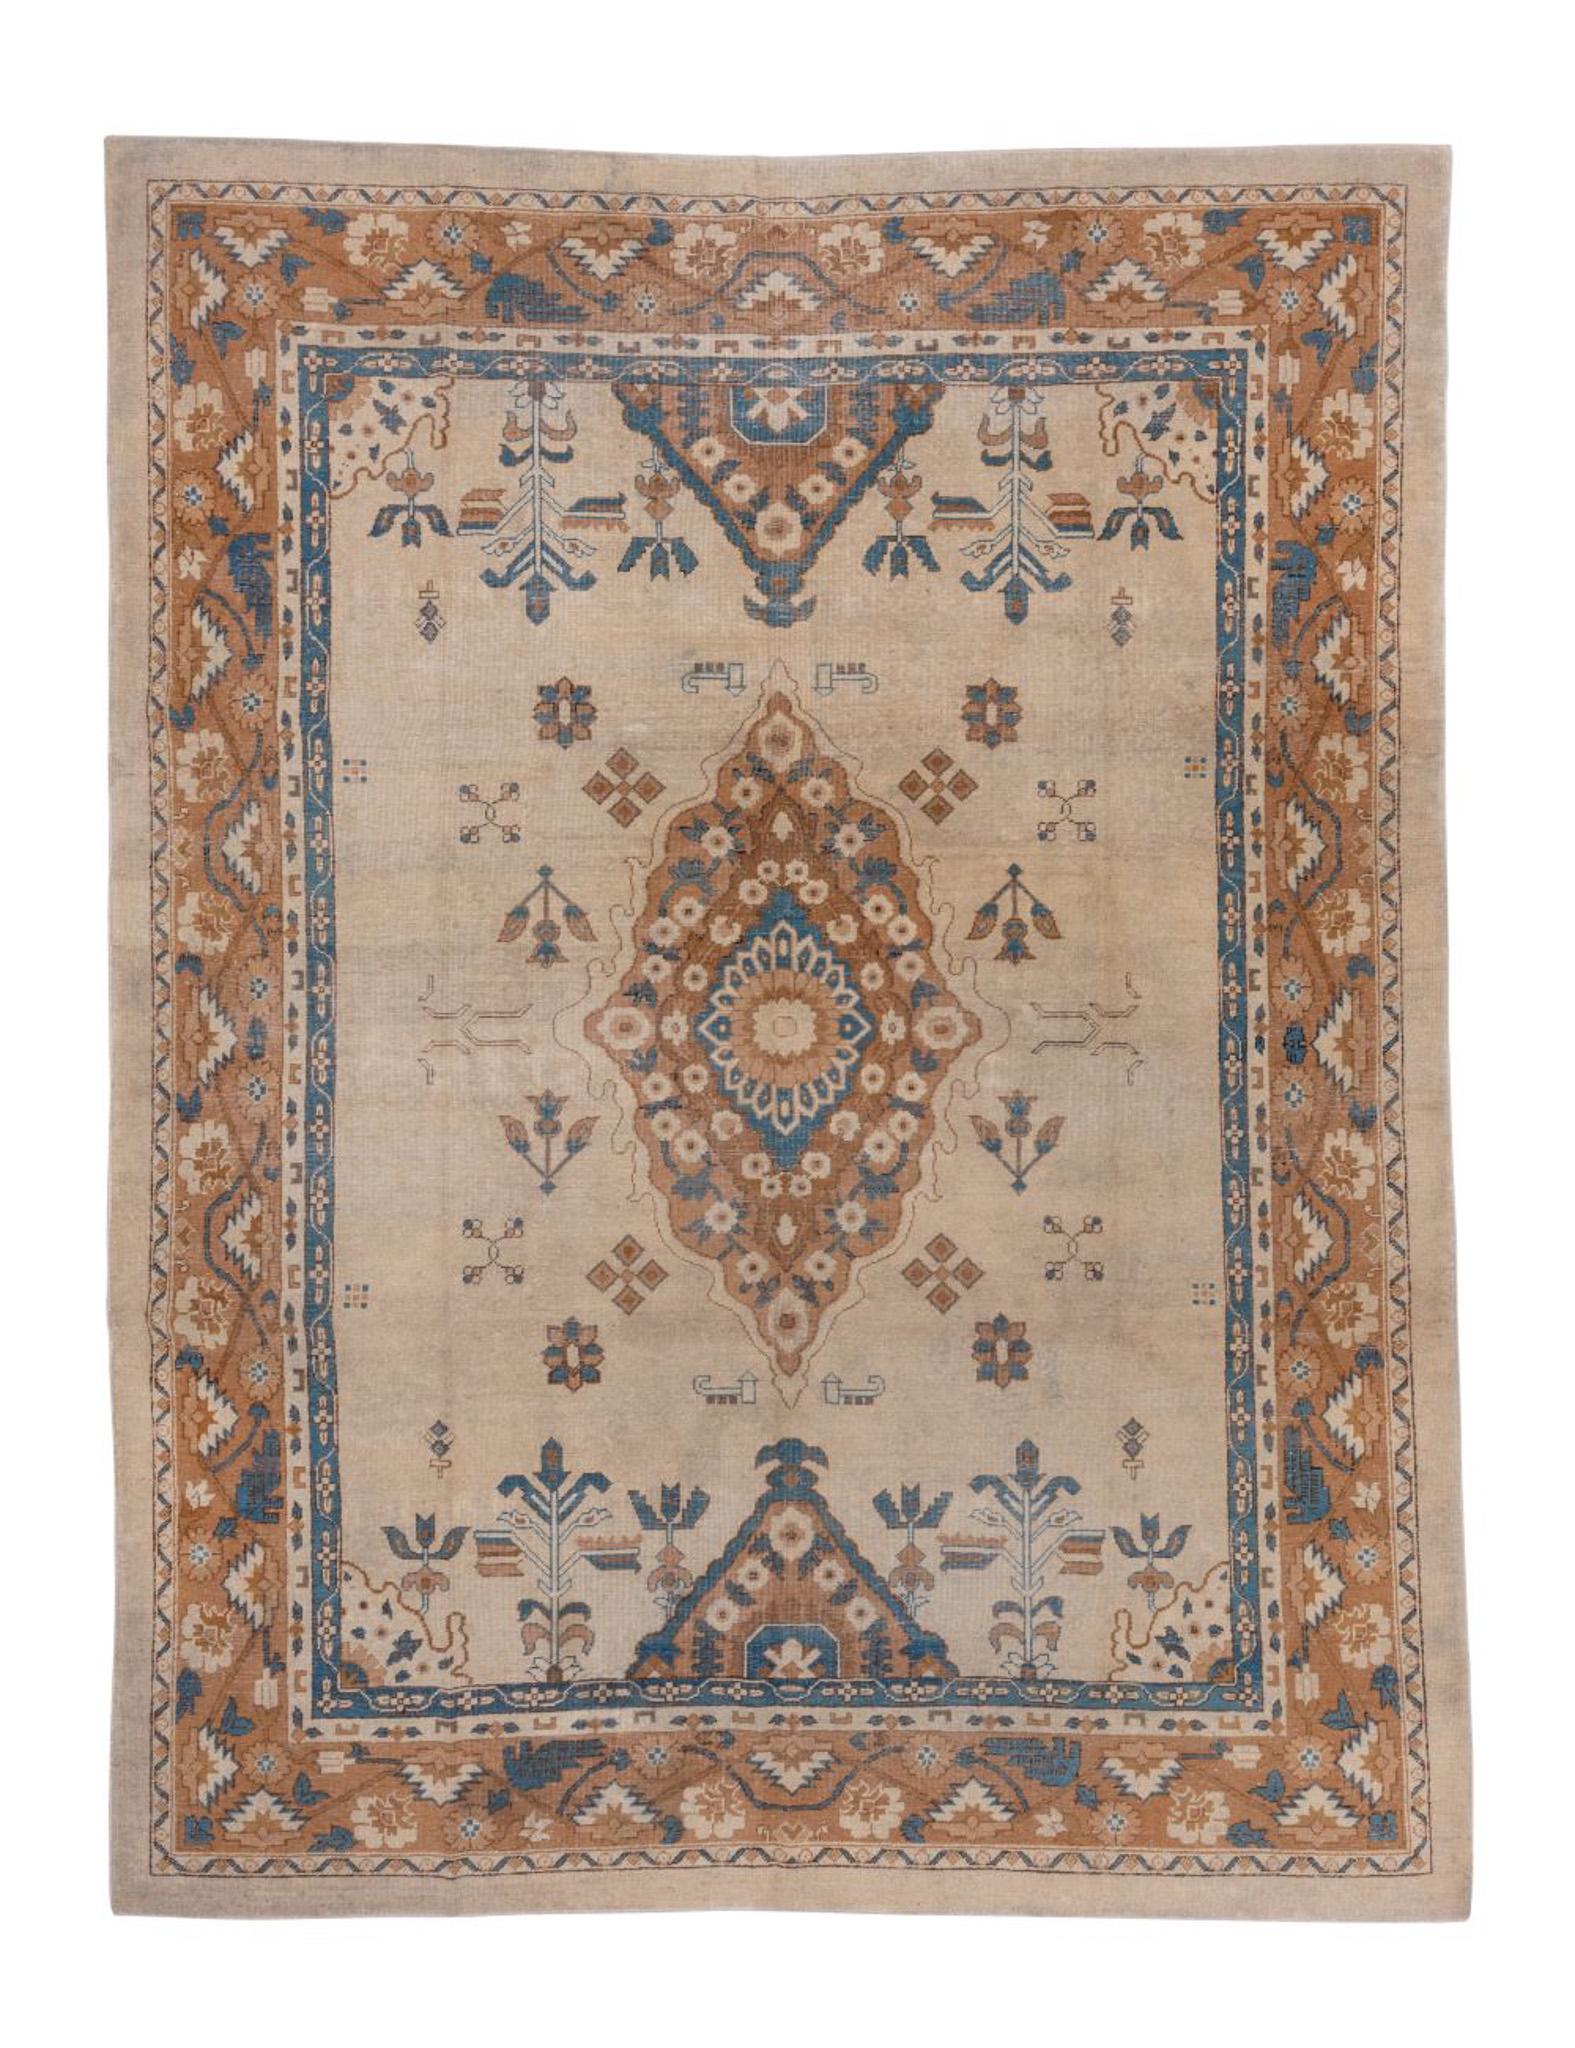 An Amritzar rug circa 1920, hand knotted. Made of 100% wool yarn.